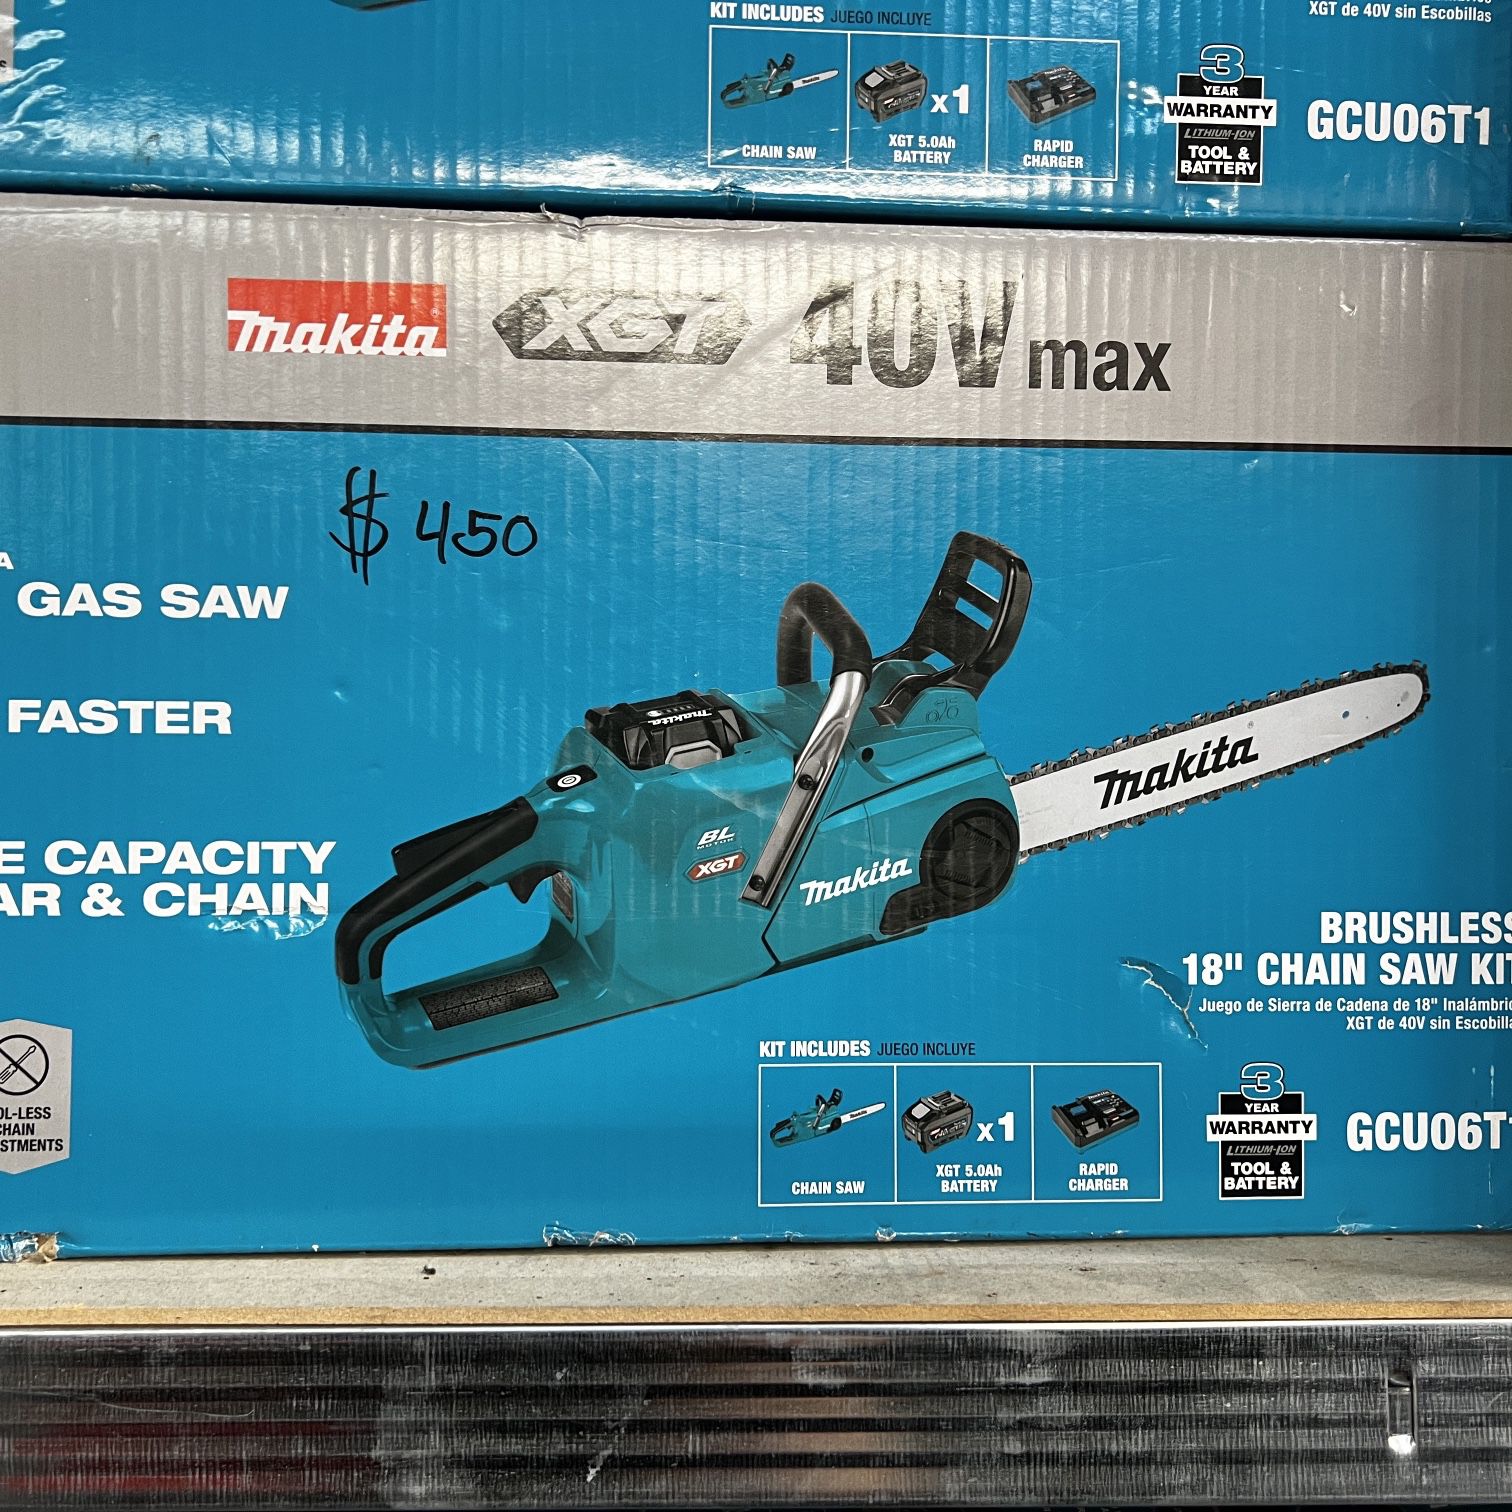 Makita XGT 40v Max Brushless 18” Chainsaw Kit